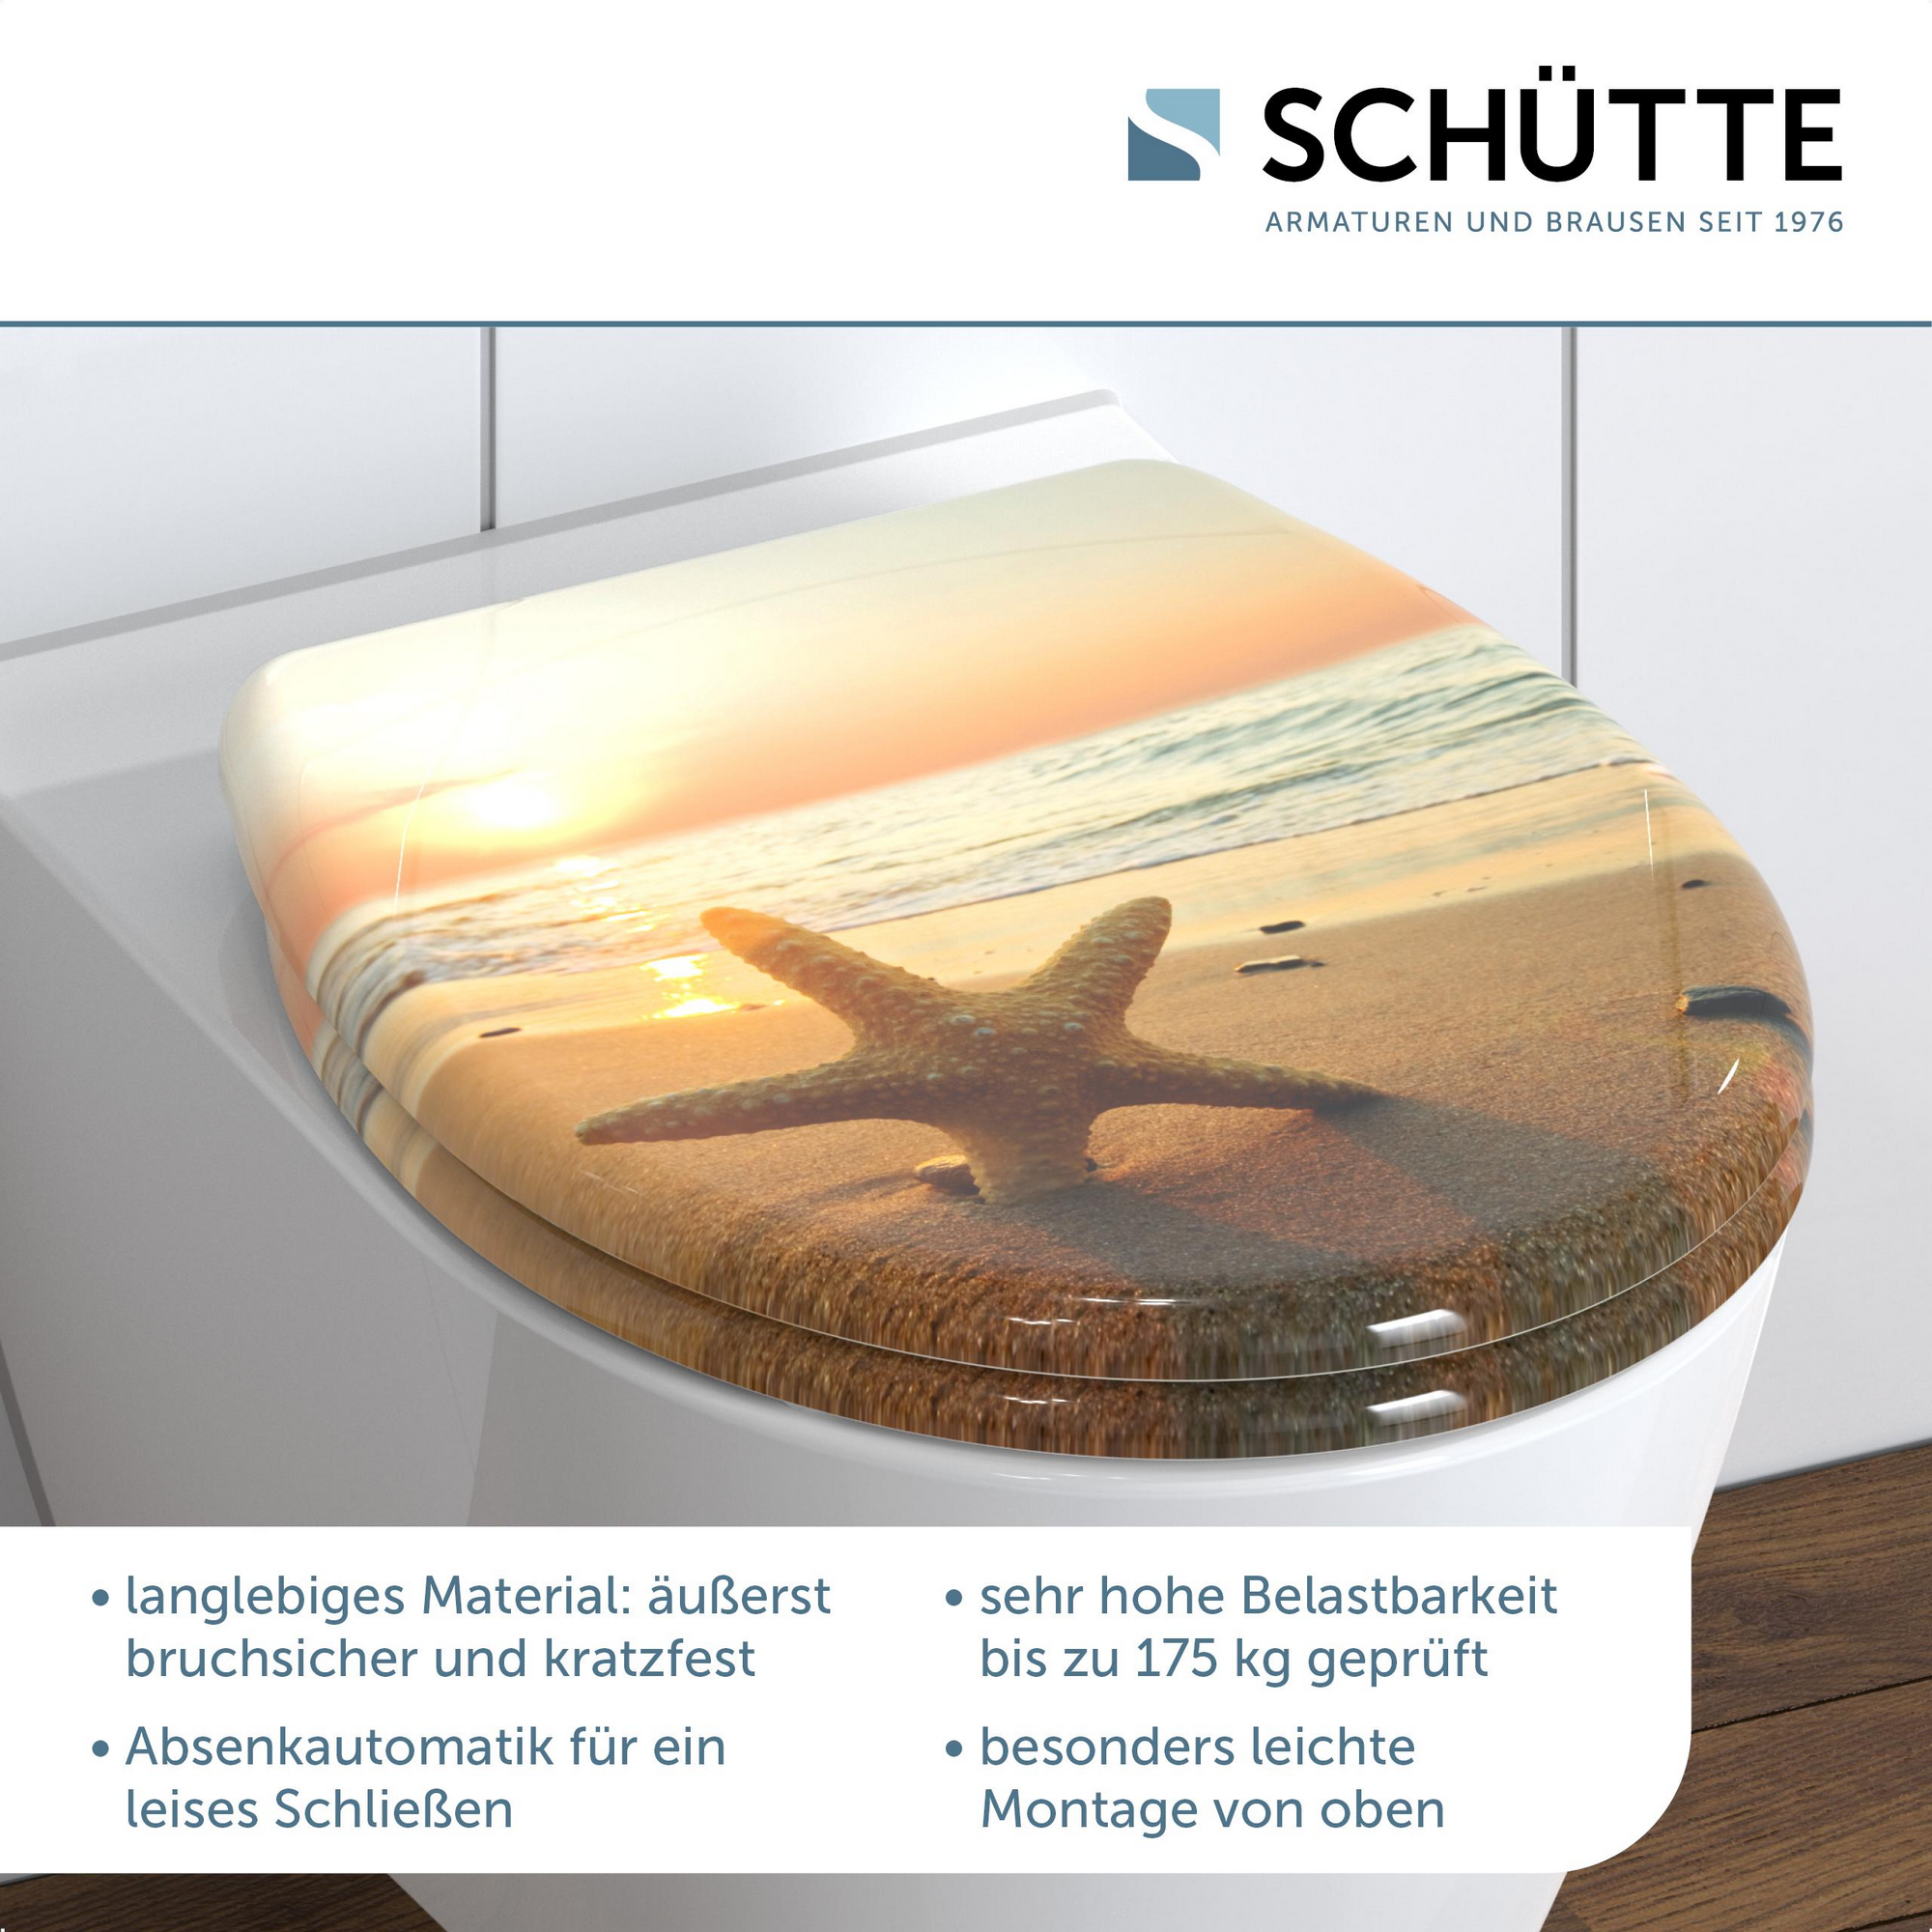 WC-Sitz 'Sea Star' mit Absenkautomatik 37,4 x 45,3 cm + product picture